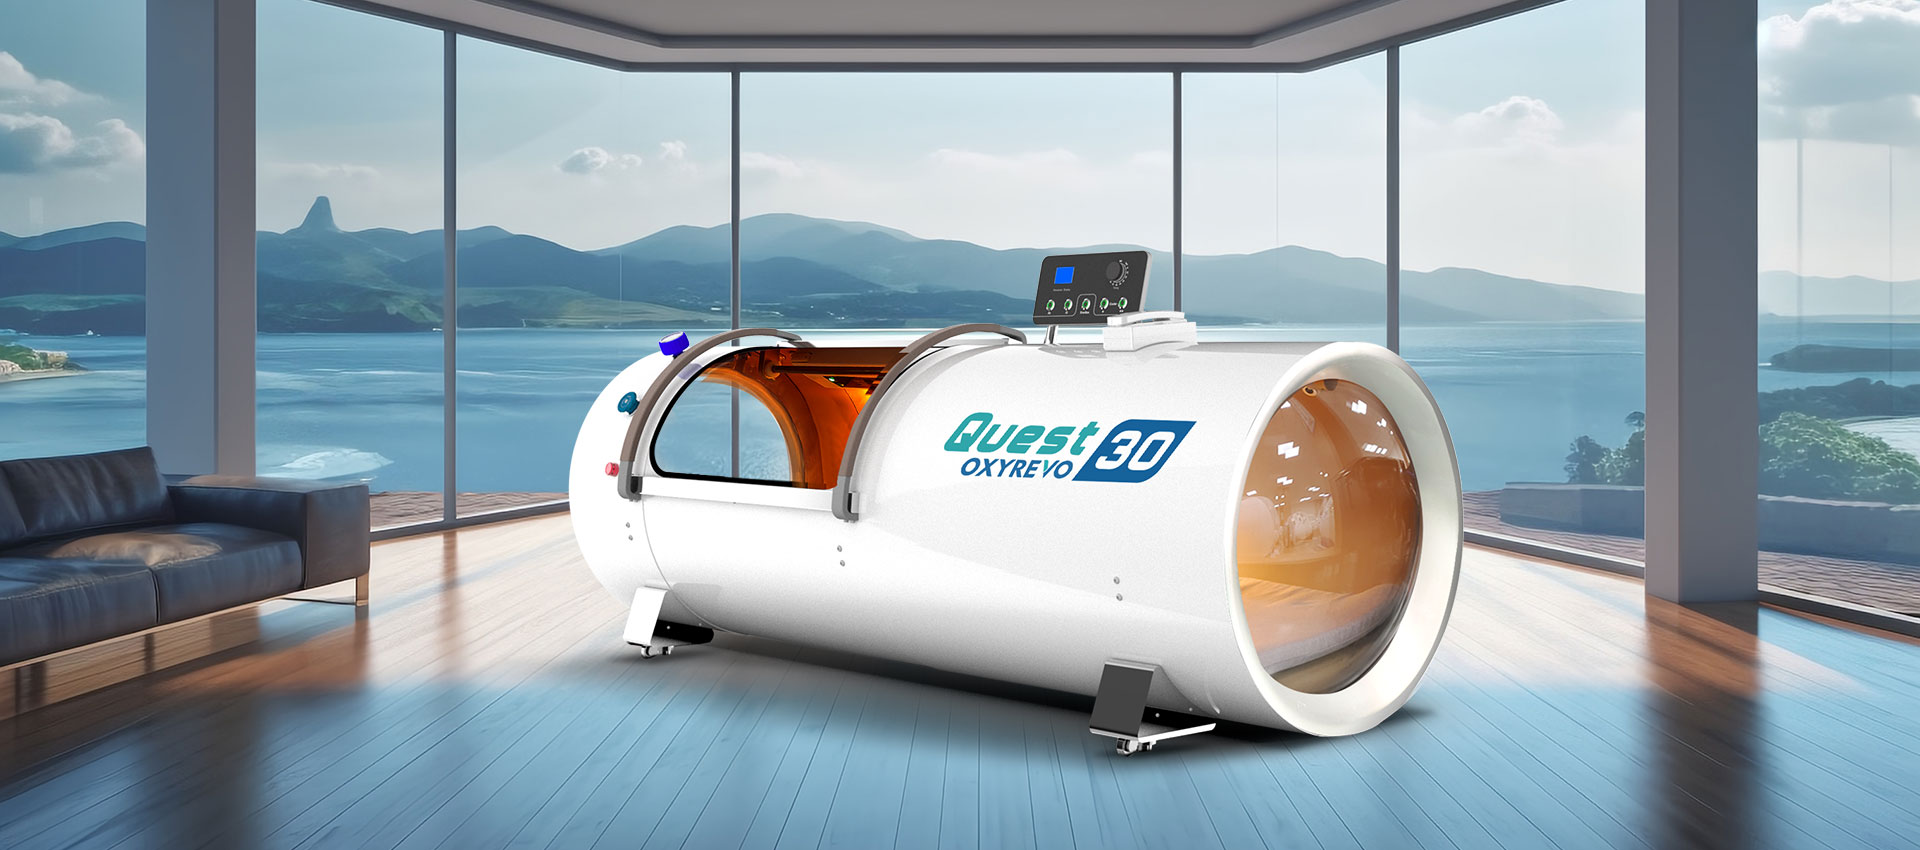 OxyRevo Quest30 Hard Hyperbaric Chamber